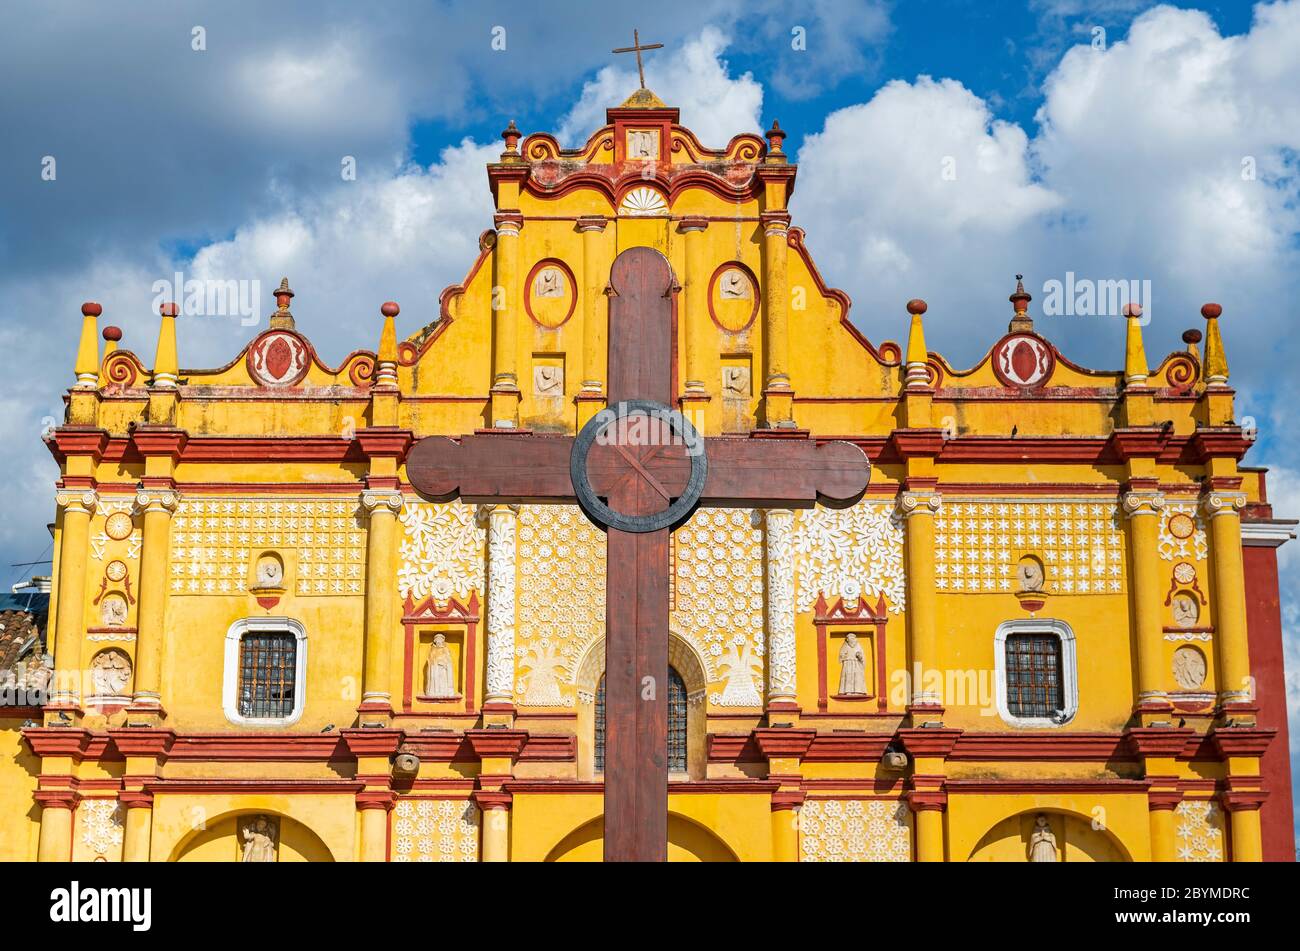 Facade of the Cathedral in San Cristobal de las Casas with a wooden cross in front, Chiapas, Mexico. Focus on Cross, unsharp building. Stock Photo